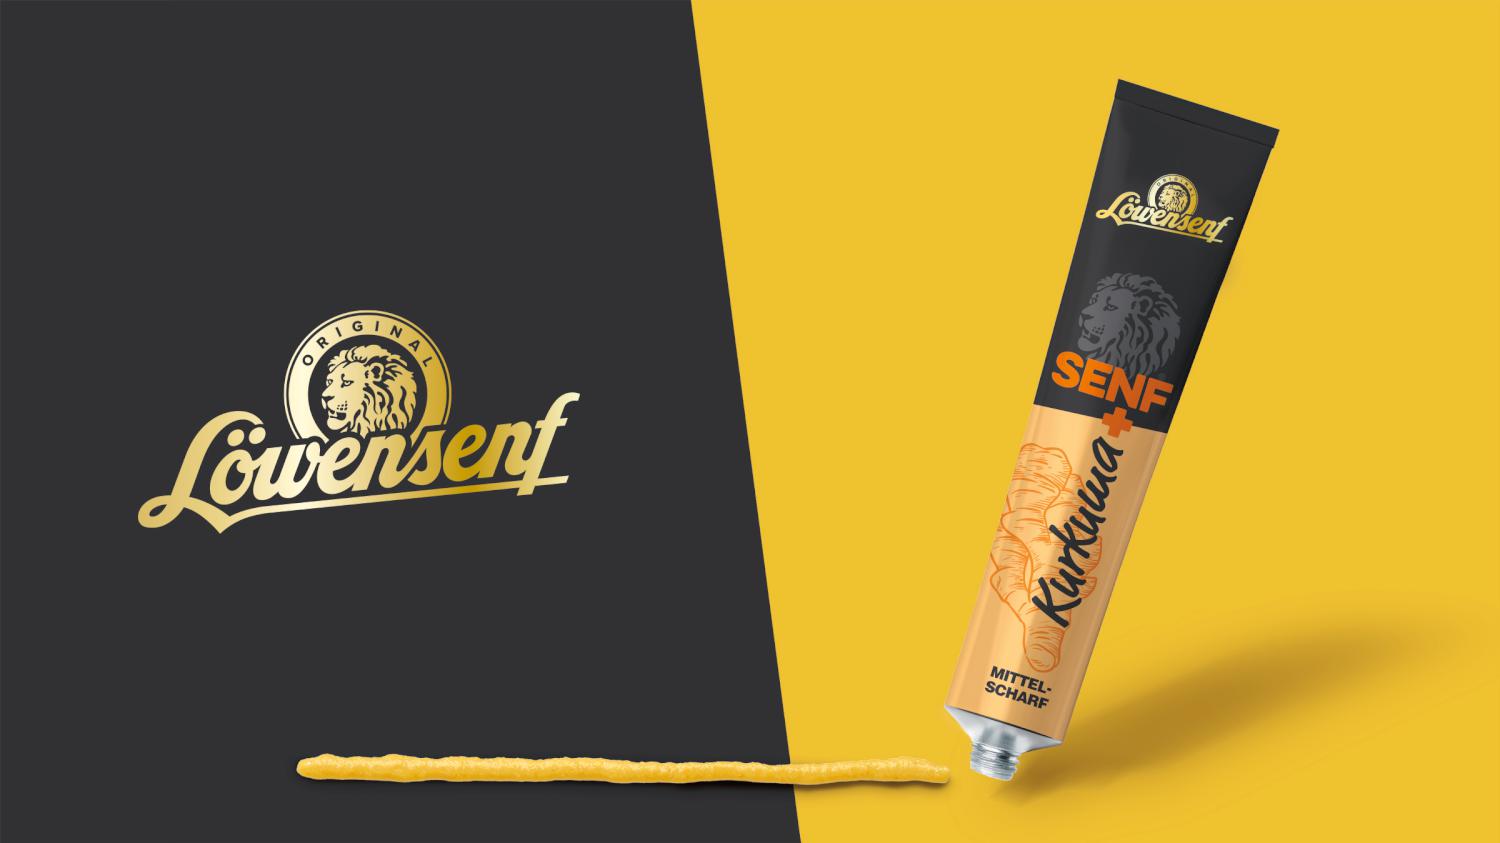 Develey Loewensenf Senf Launch Grafikdesign Branding-Strategie Verpackungsdesign Logodesign